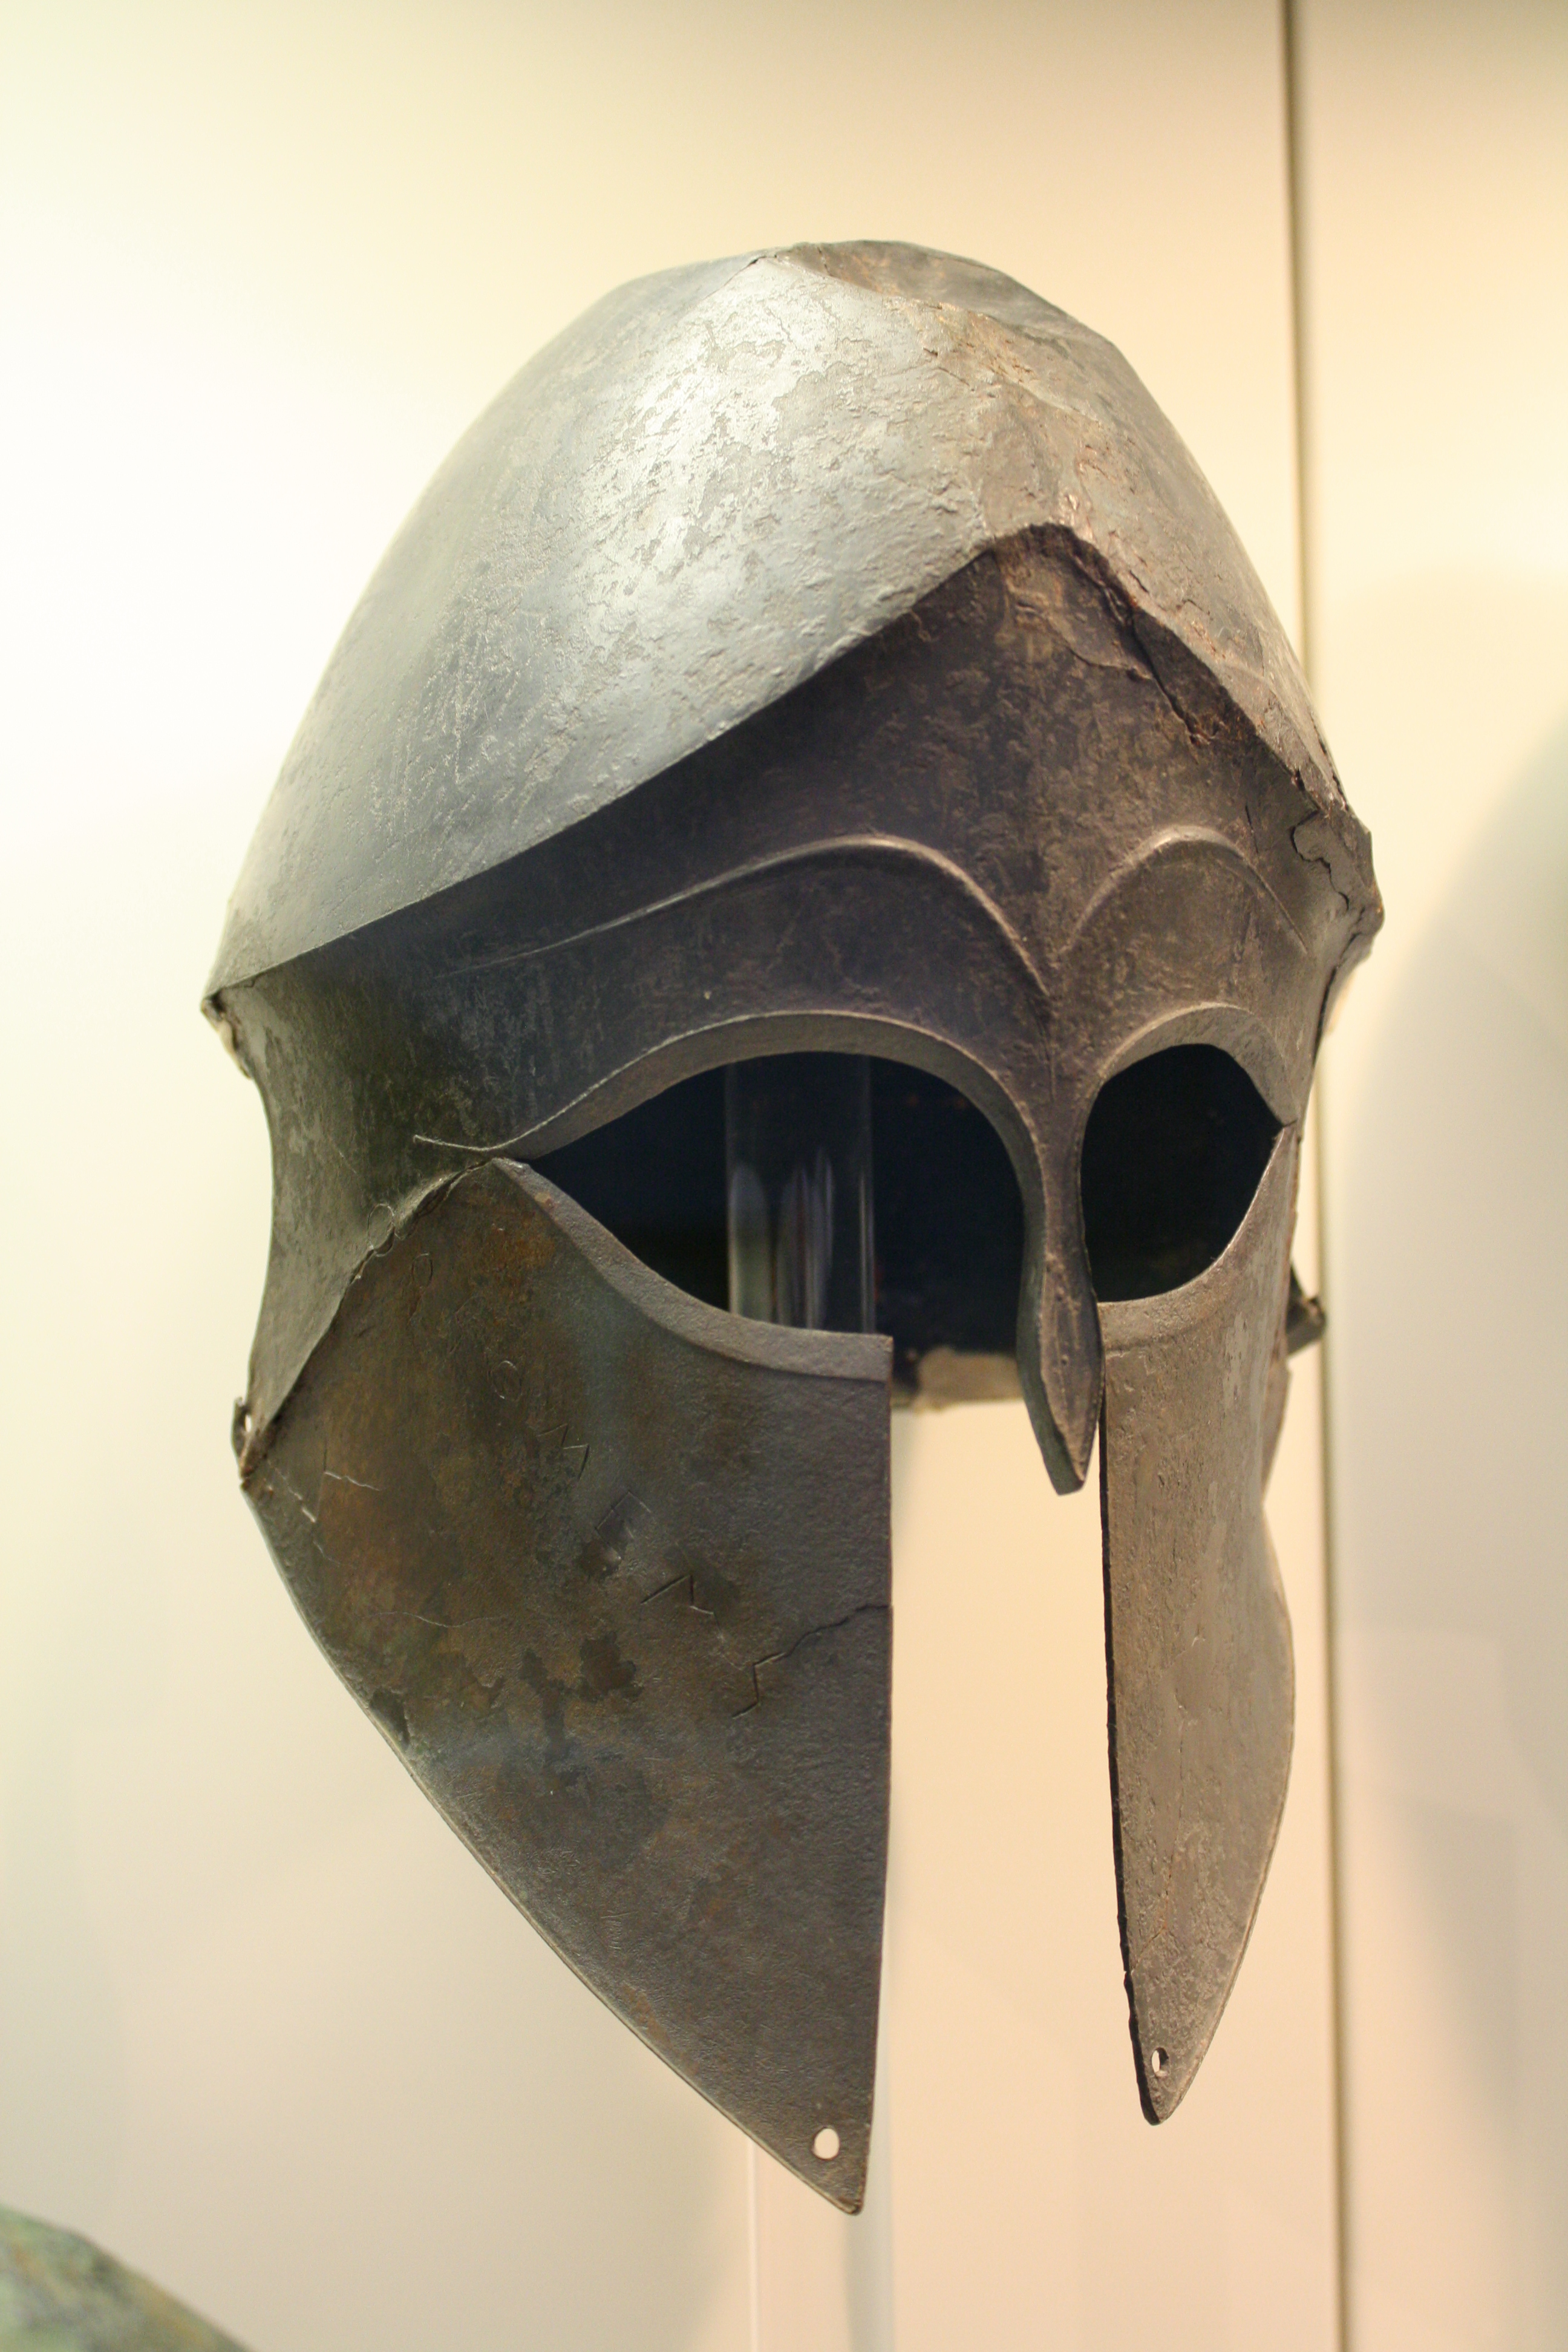 The Corinthian Helmet and Body Armor | The Hoplite Battle Experience